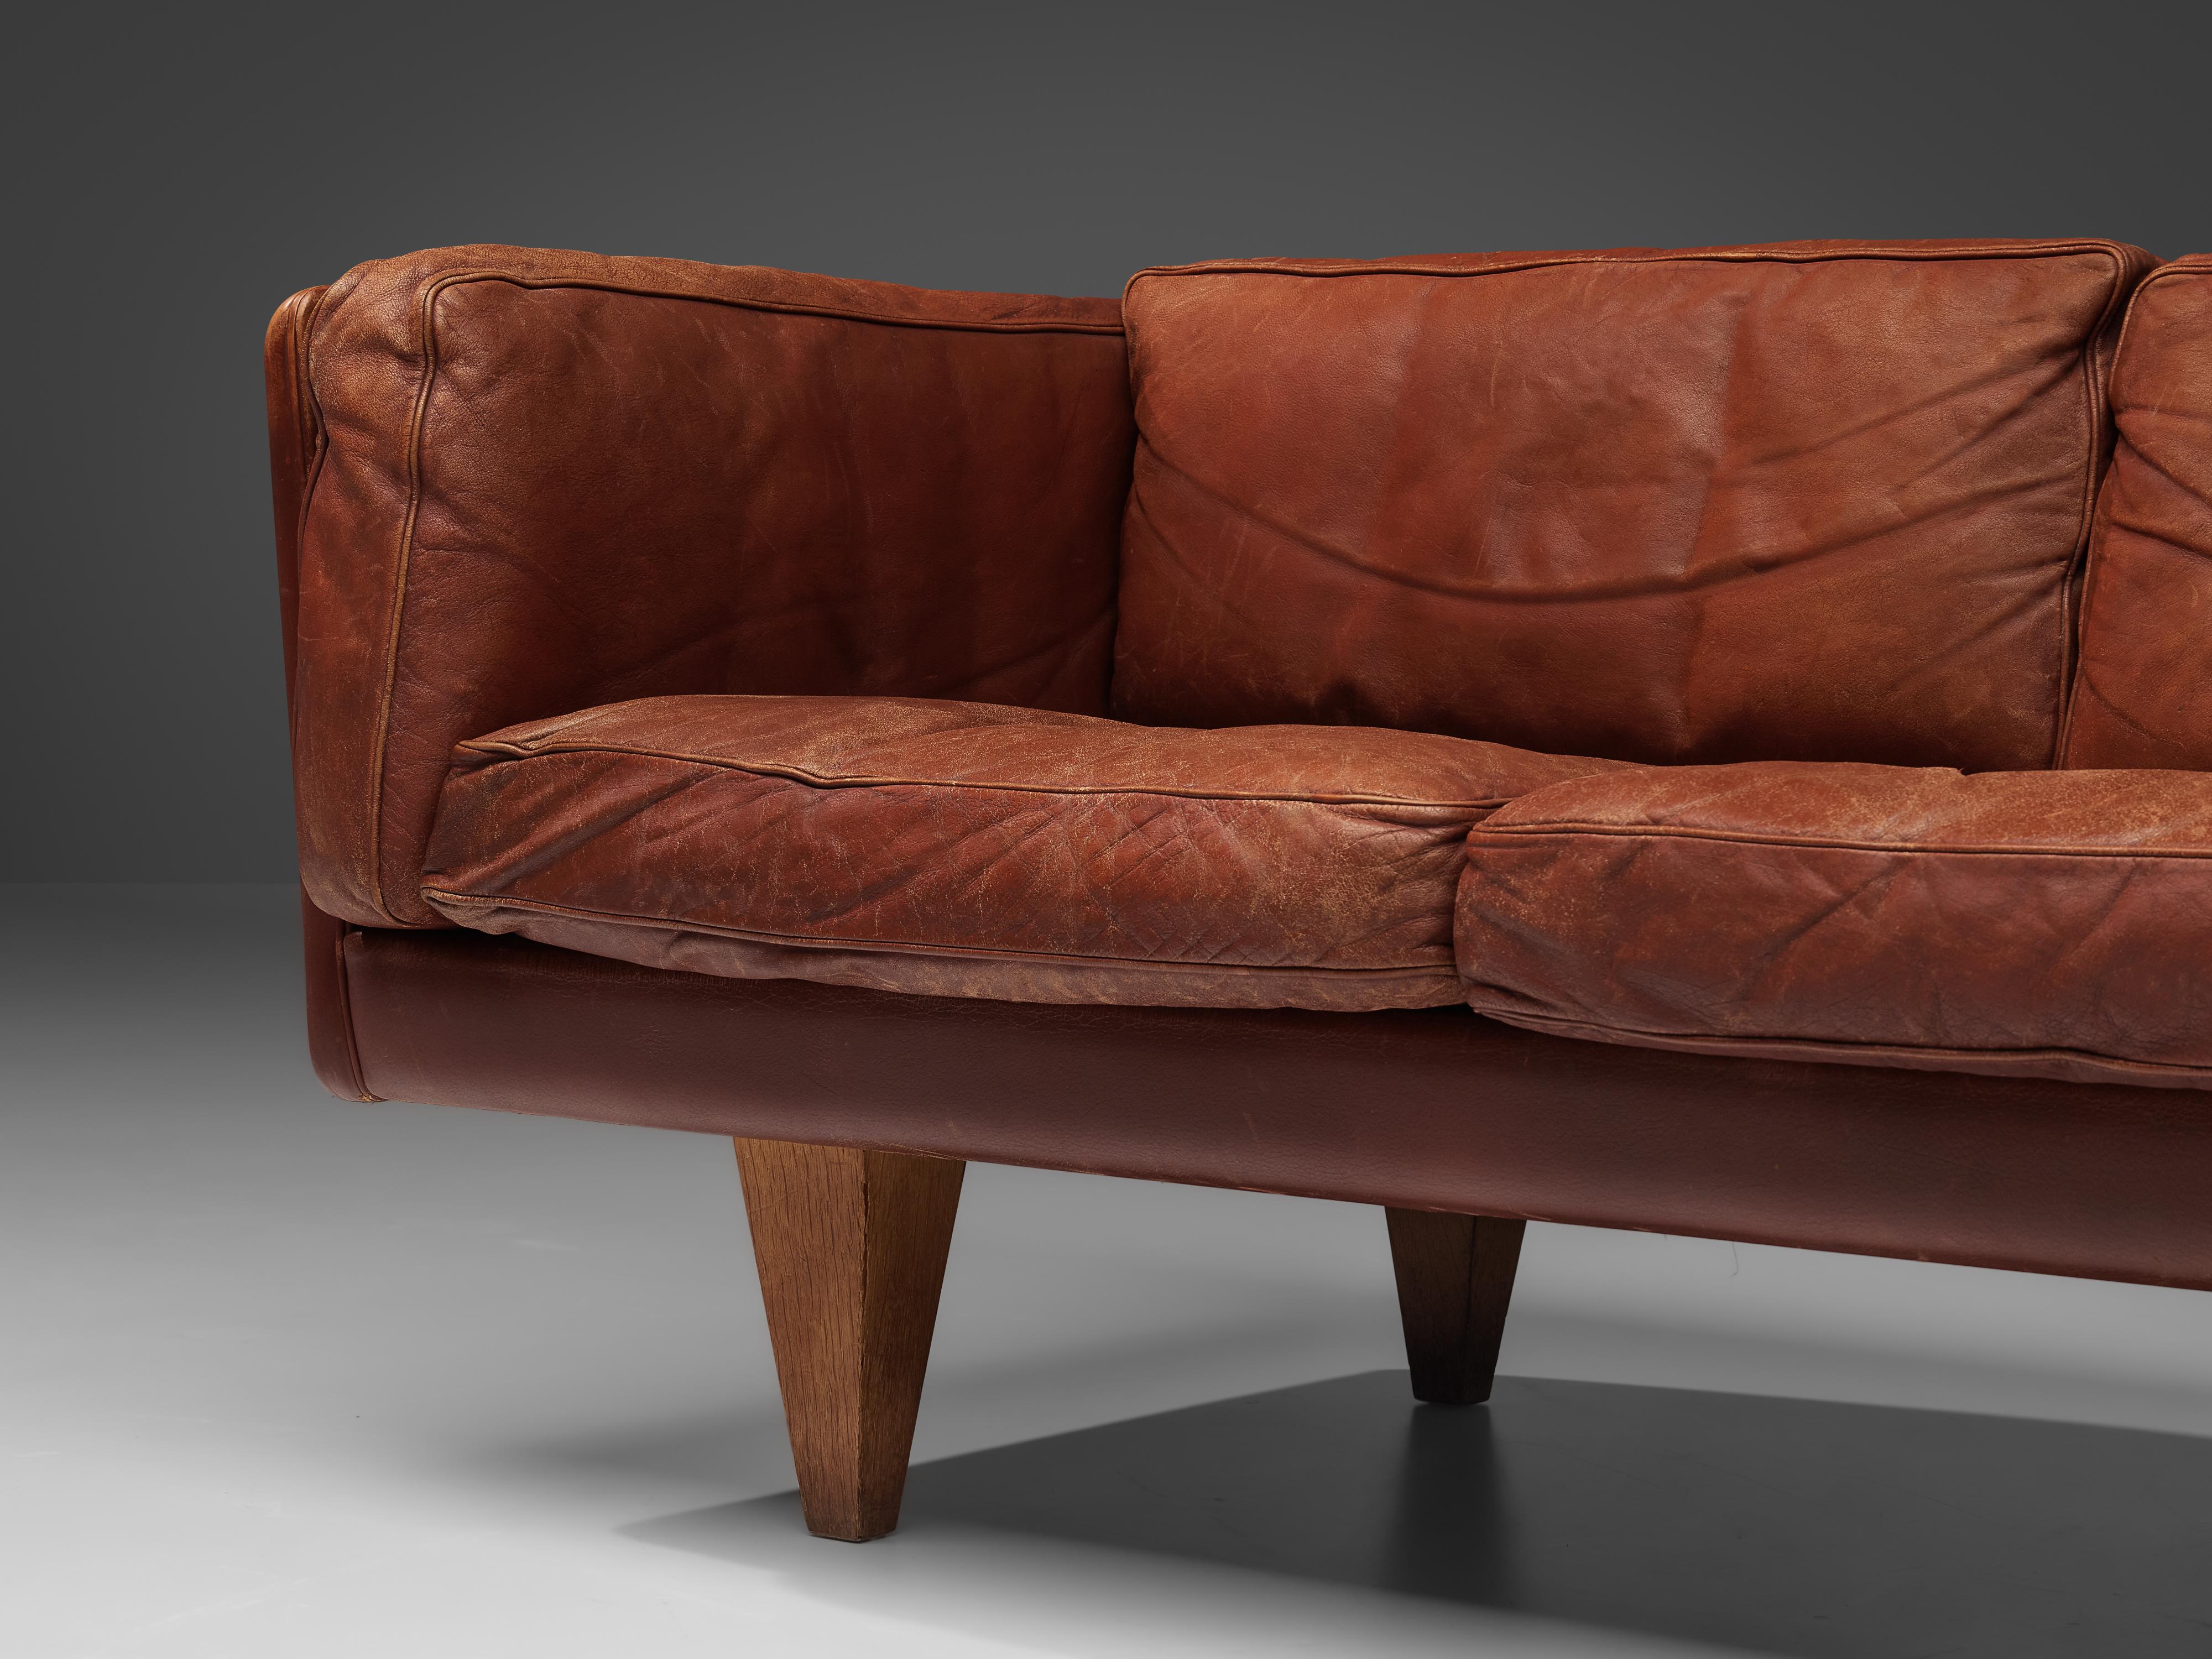 Illum Wikkelsø for Holger Christiansen Three-Seat Sofa in Brown Leather 3